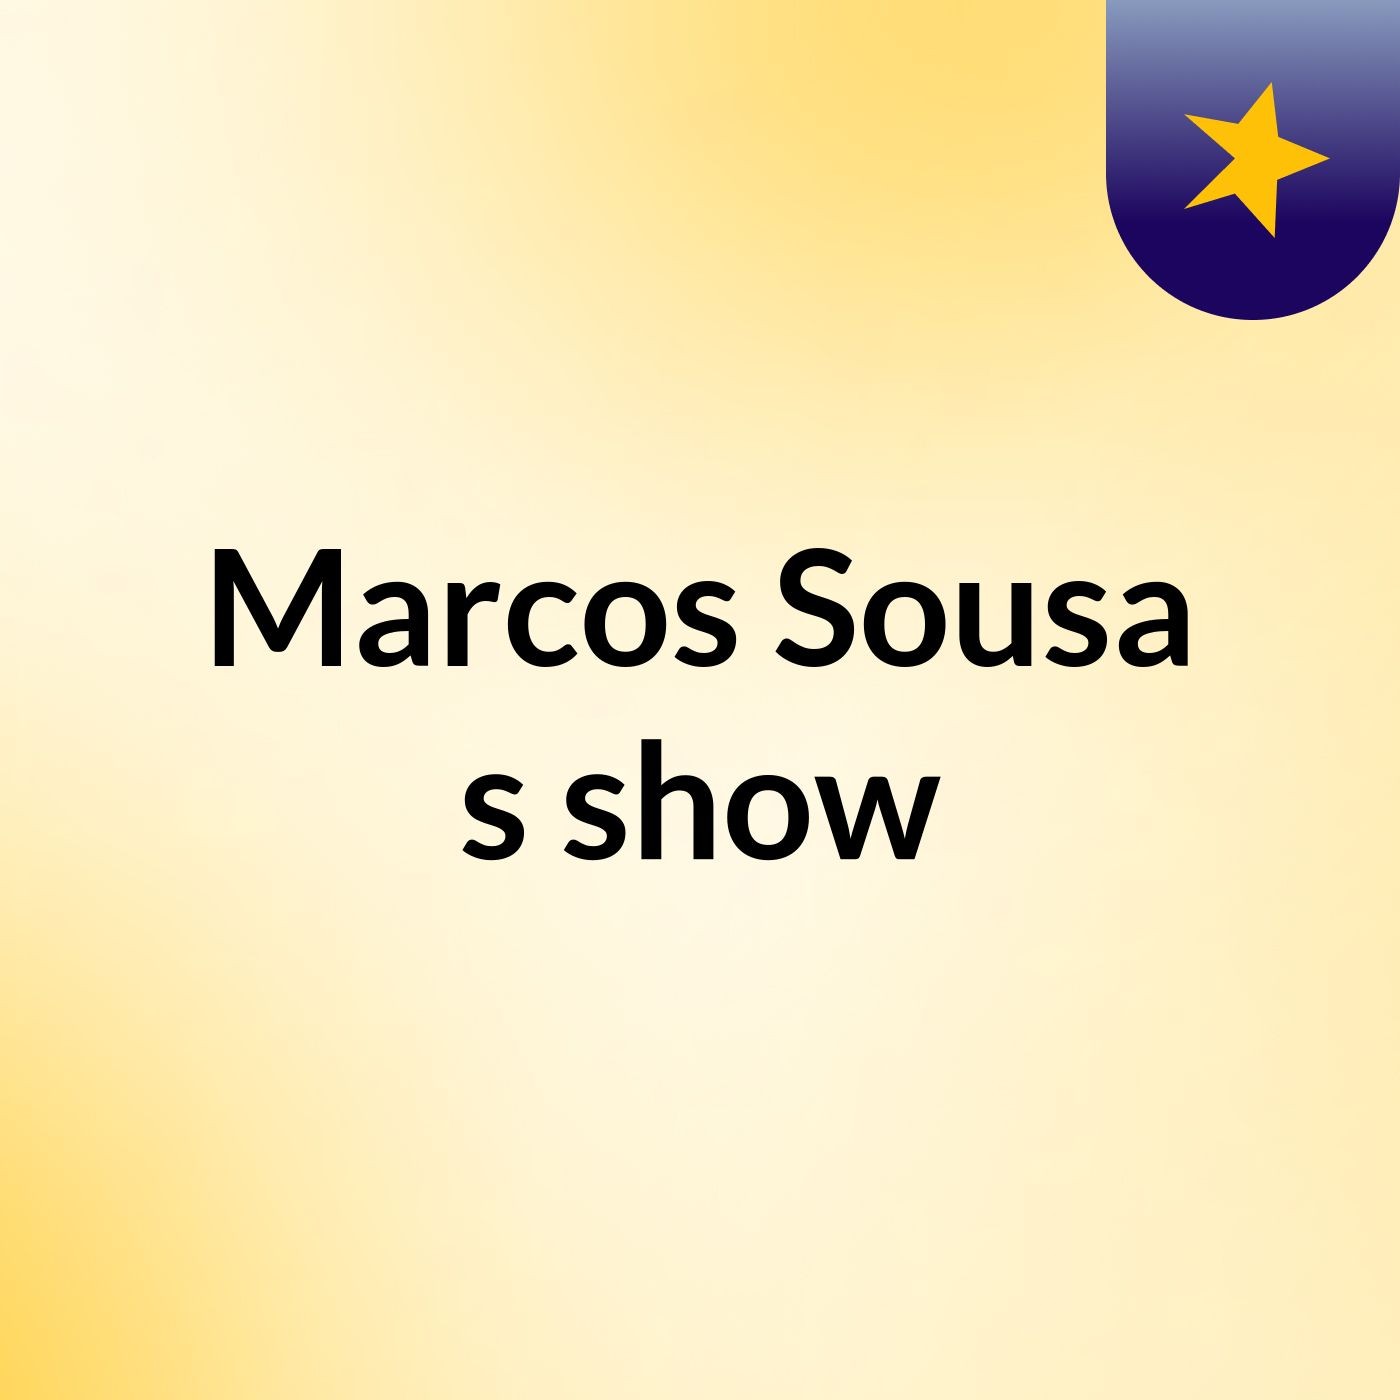 Marcos Sousa's show